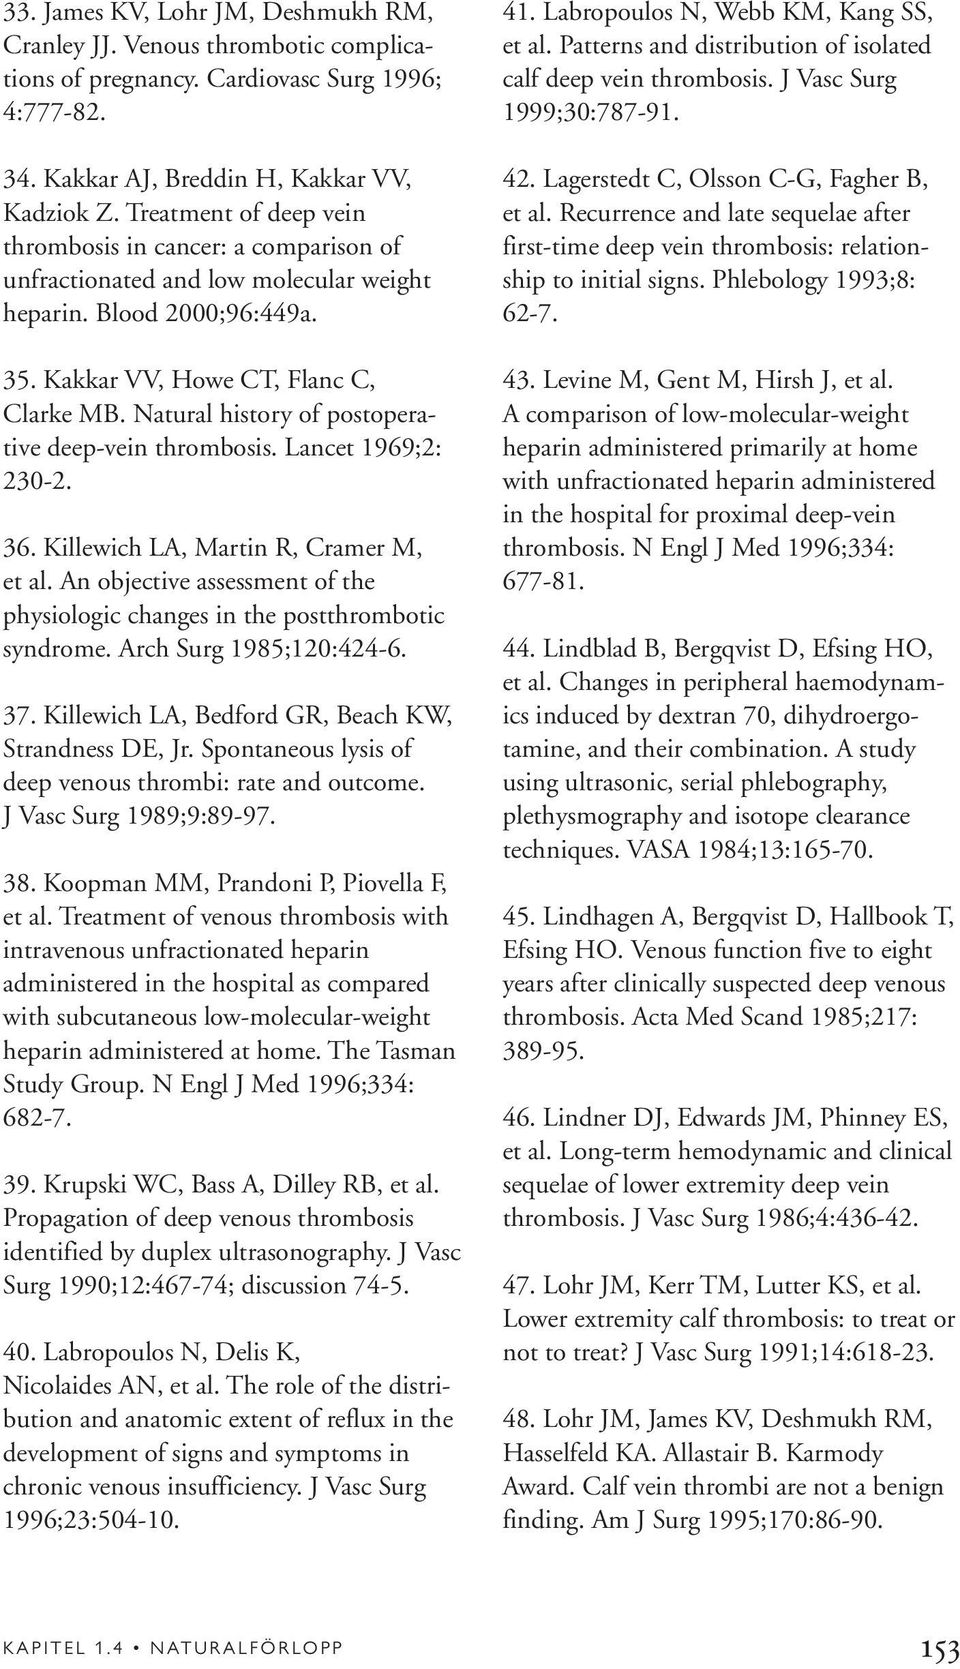 Natural history of postoperative deep-vein thrombosis. Lancet 1969;2: 230-2. 36. Killewich LA, Martin R, Cramer M, et al.